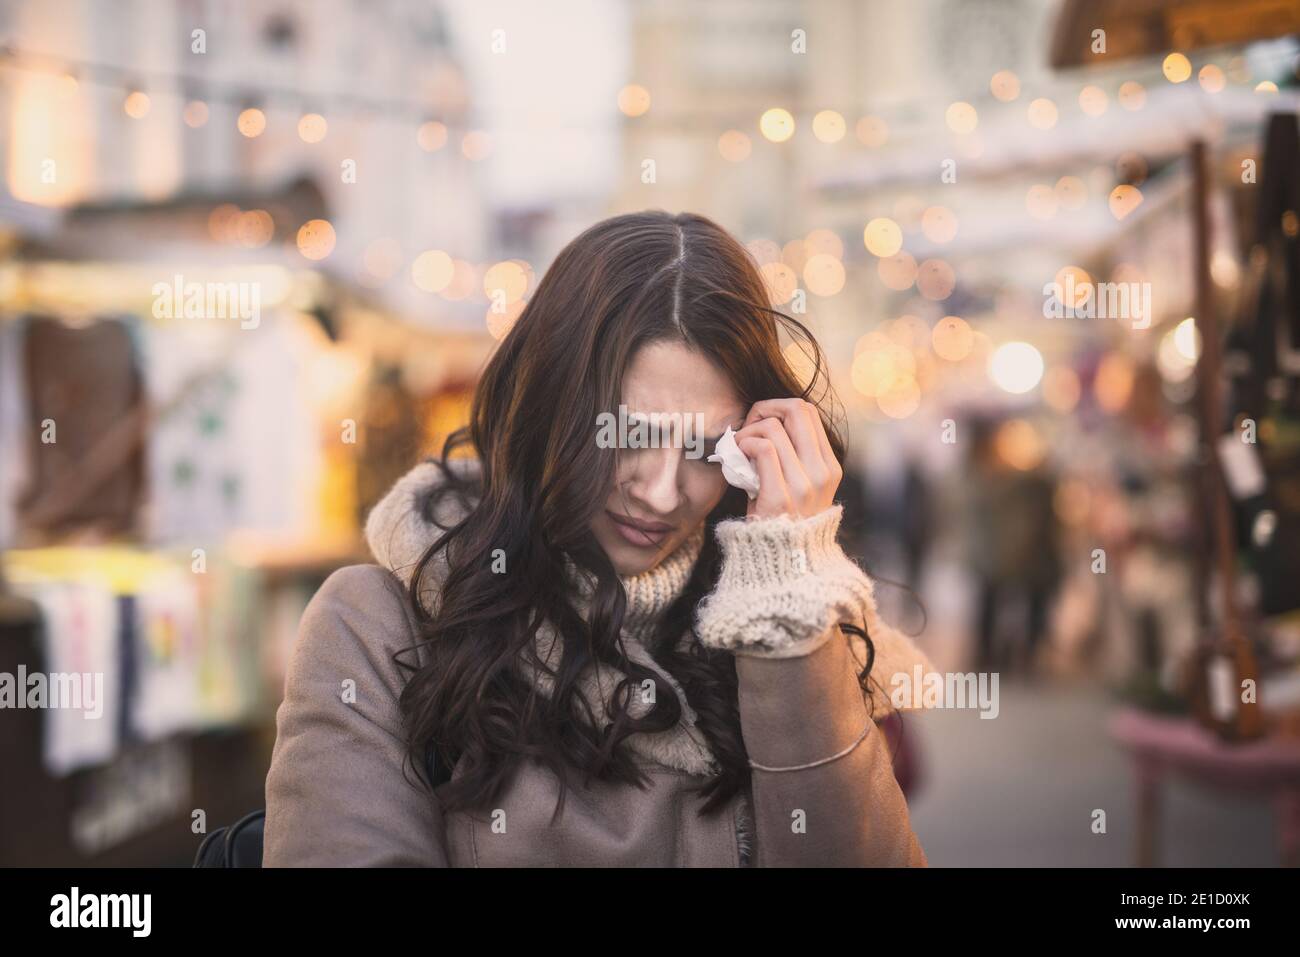 Sad Woman Crying On The Street Stock Photo Alamy